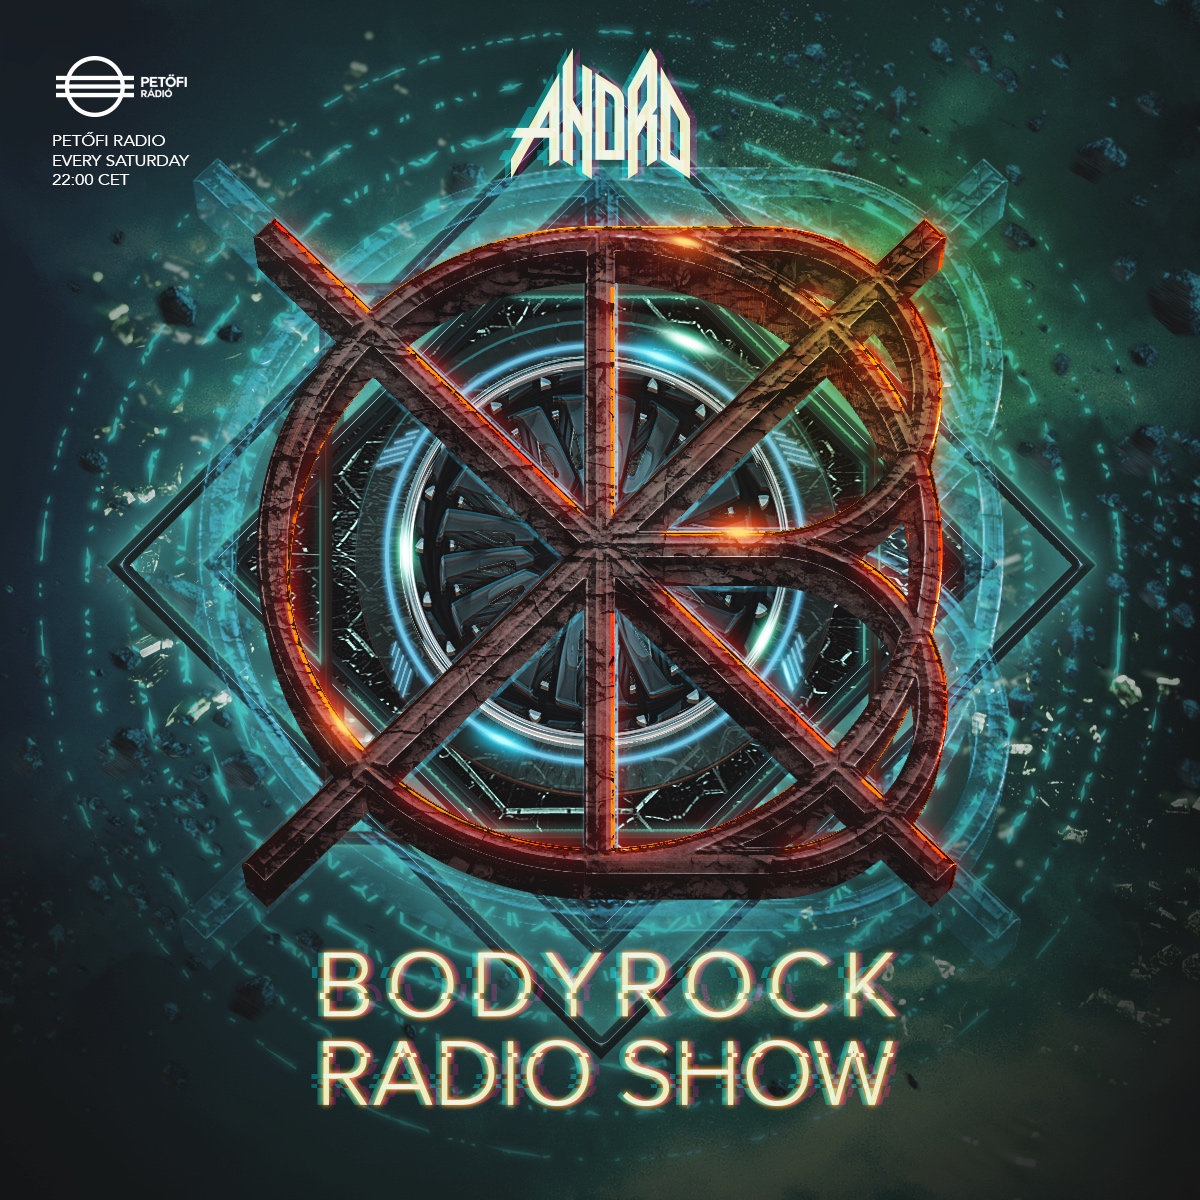 Bodyrock Radio Show 40 (2016)